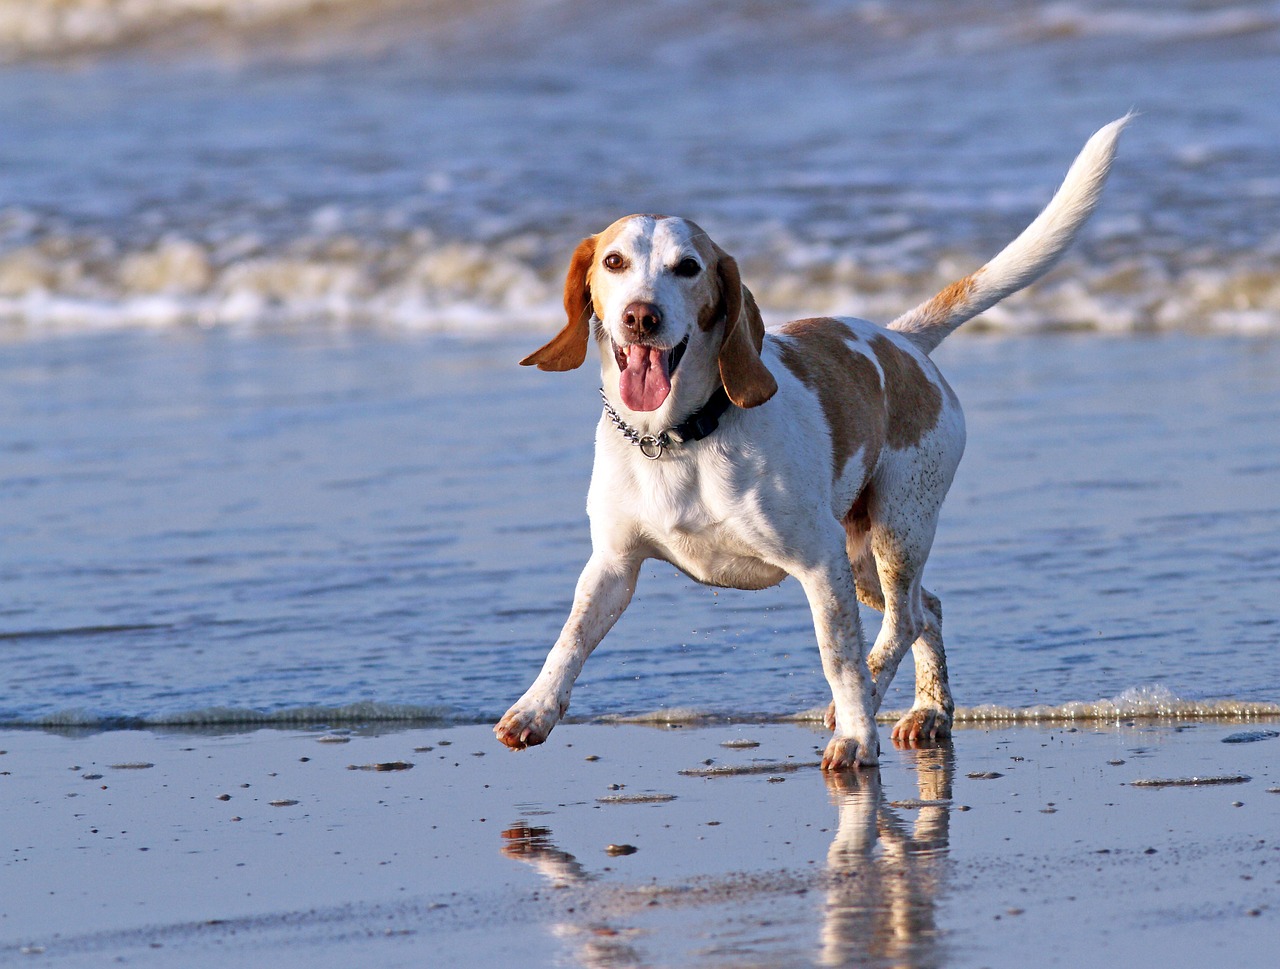 A medium-sized dog on the beach, enjoying our dog puns.